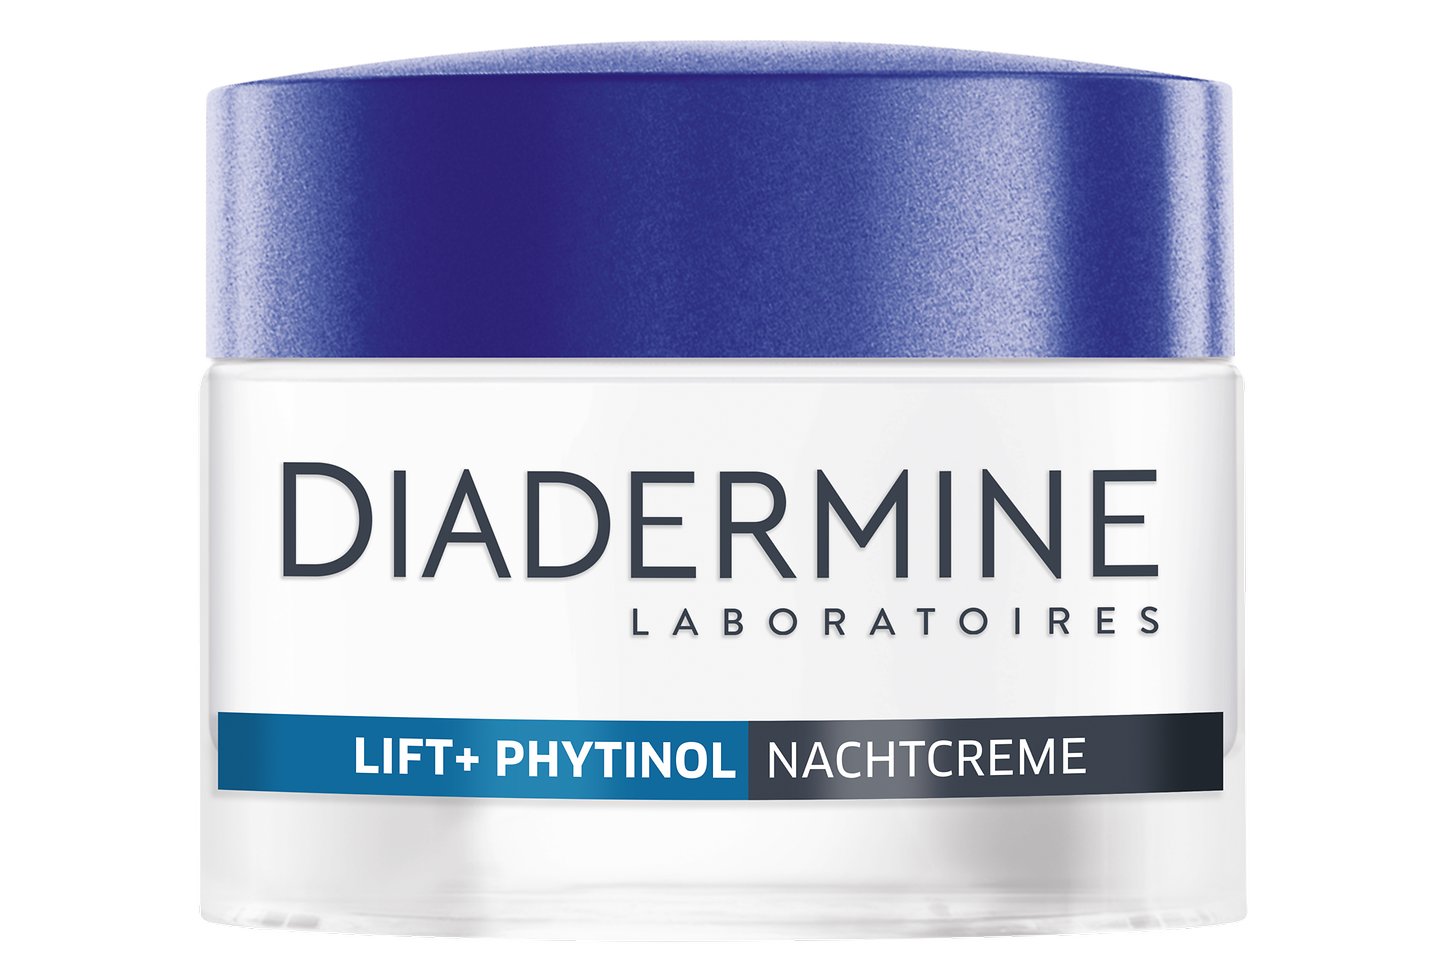 Diadermine Lift+ Phytinol Anti-Age Nachtcreme